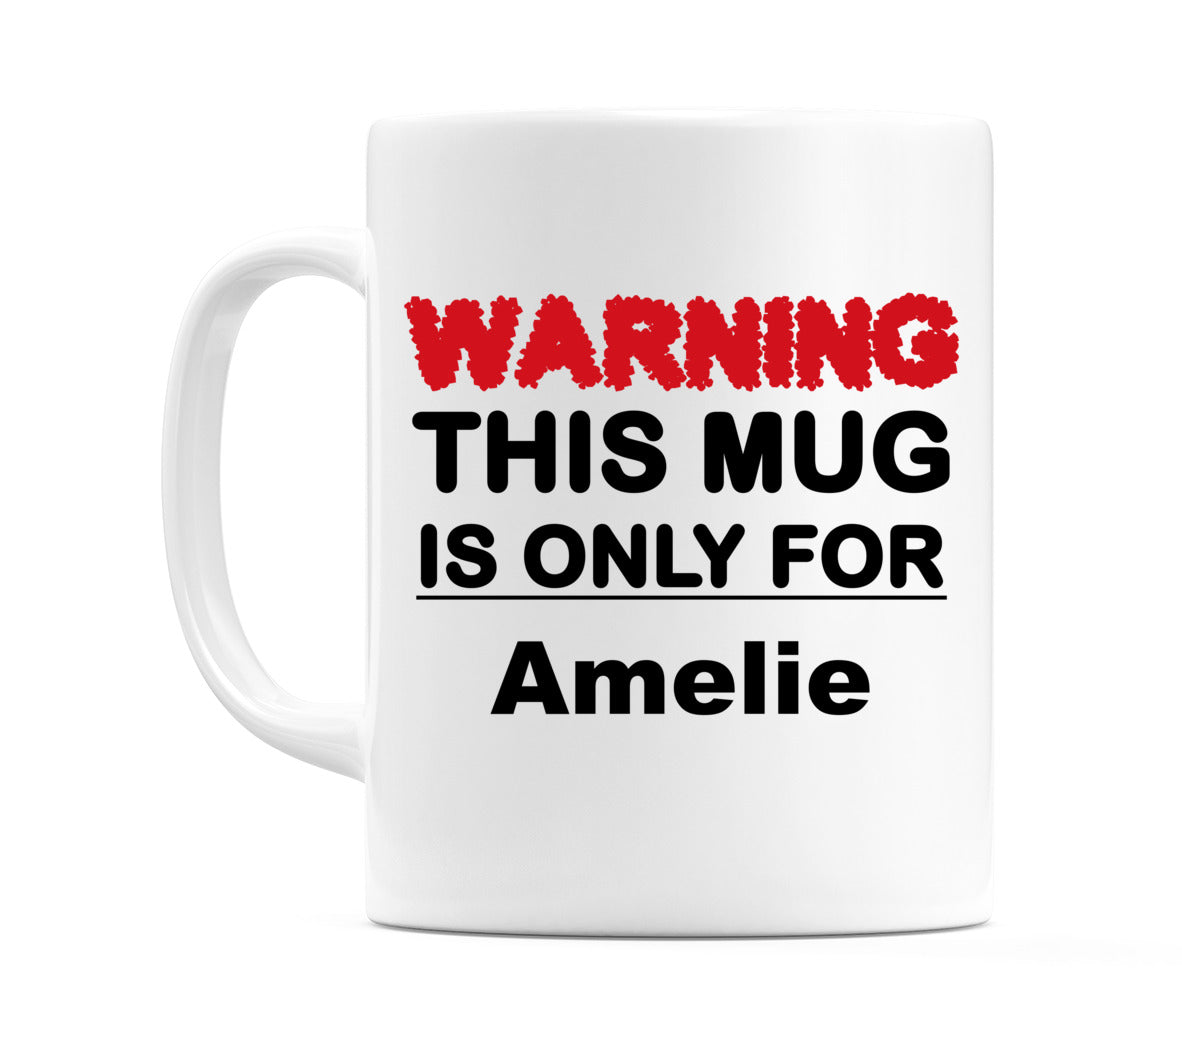 Warning This Mug is ONLY for Amelie Mug